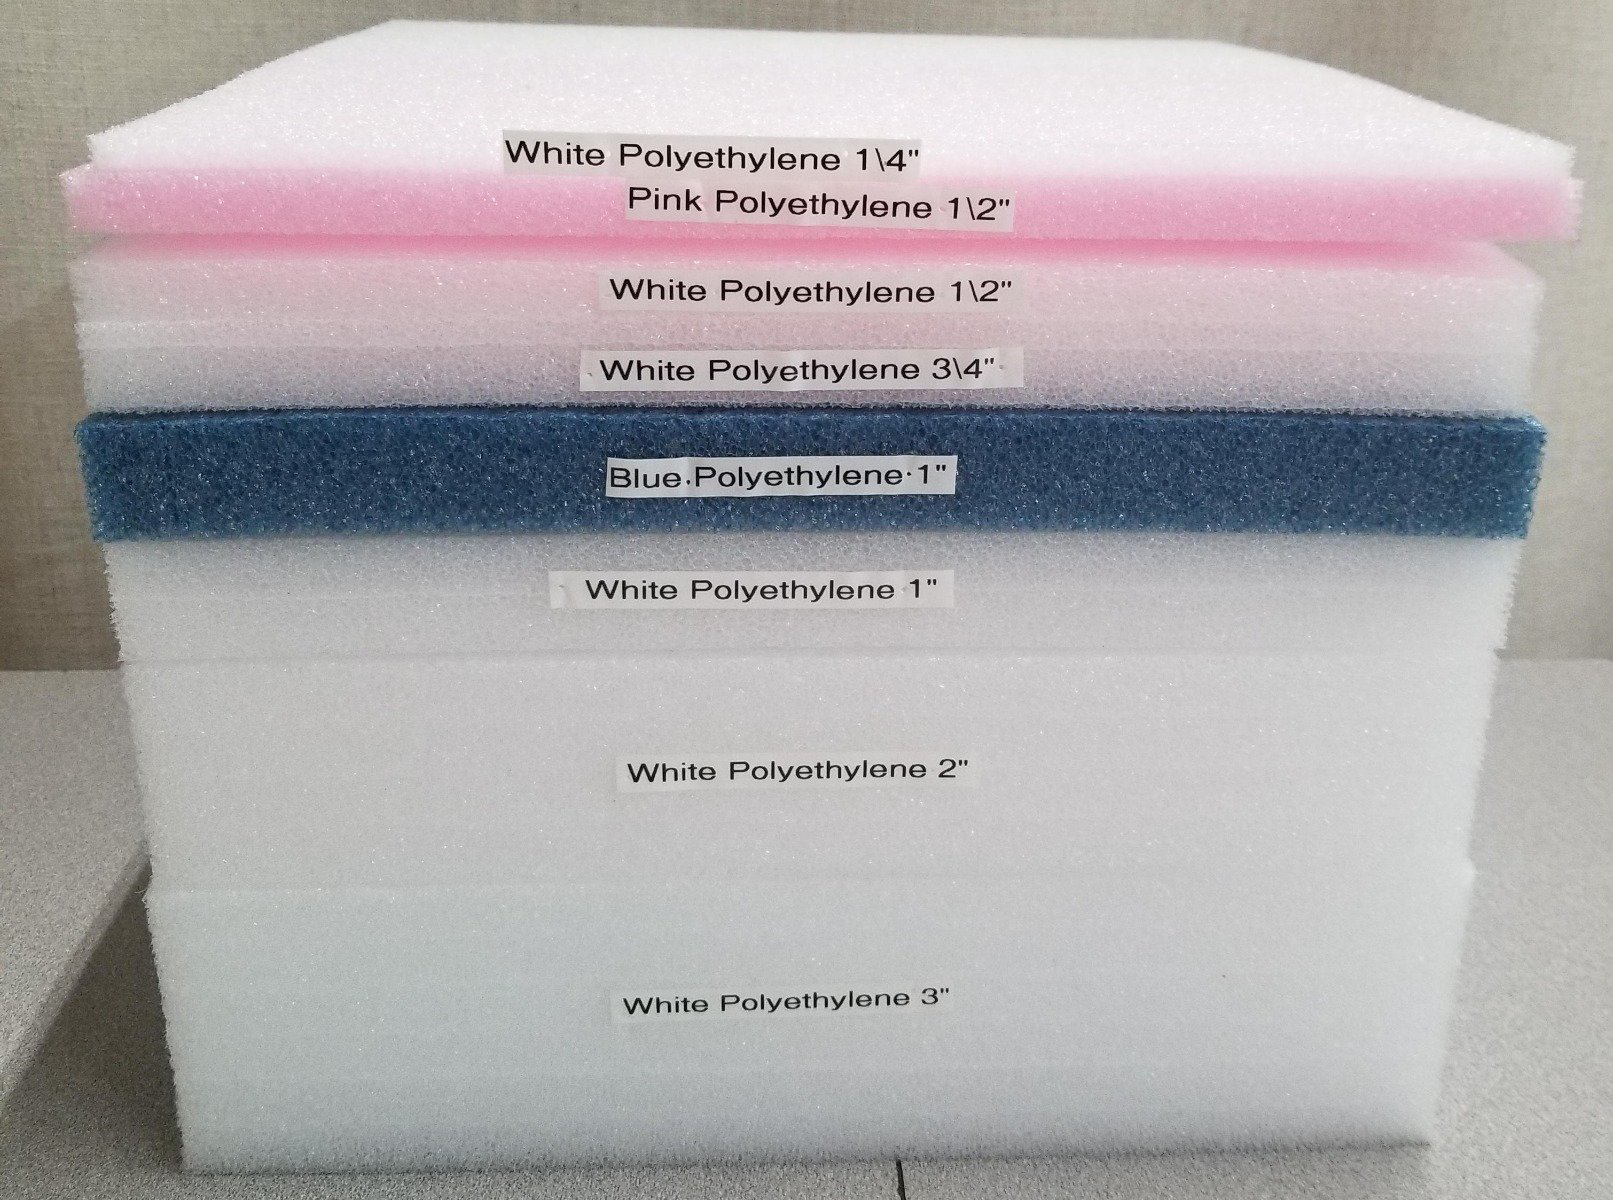 1-1/2 thick 1.7lb PE Plank Foam